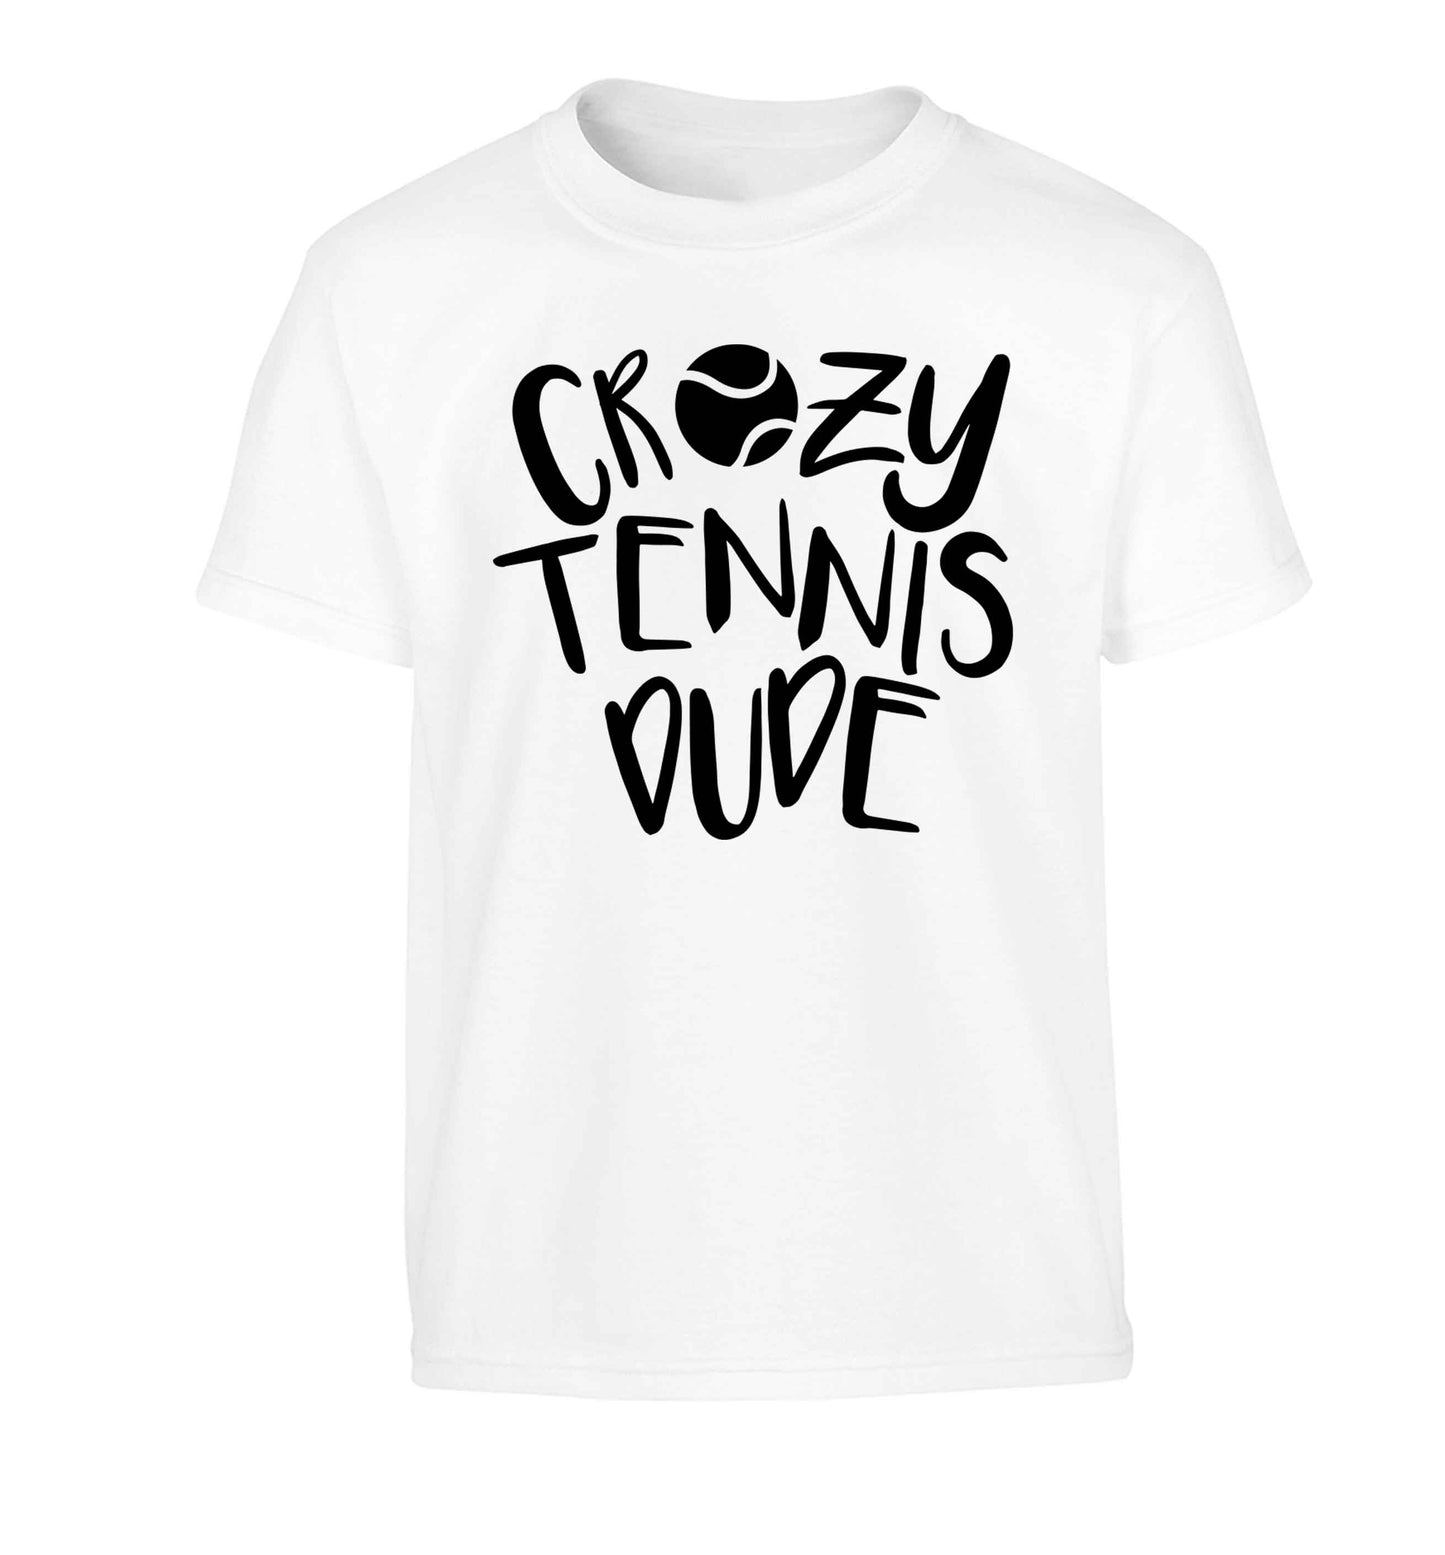 Crazy tennis dude Children's white Tshirt 12-13 Years